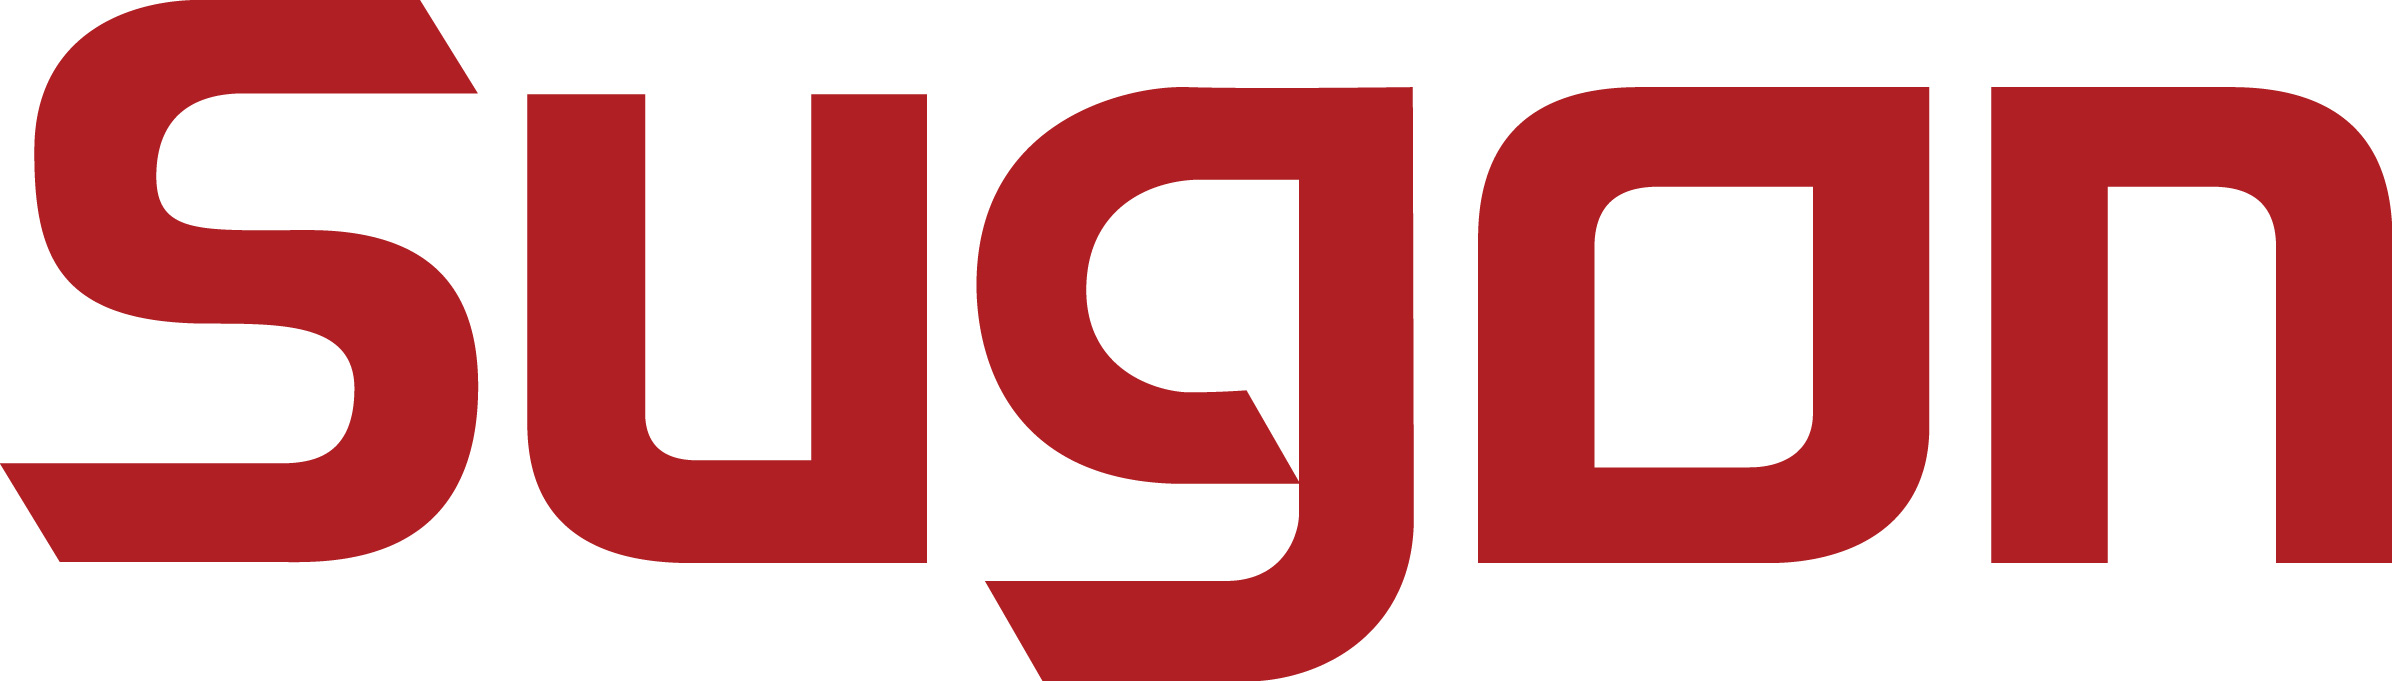 sugon logo预览图片